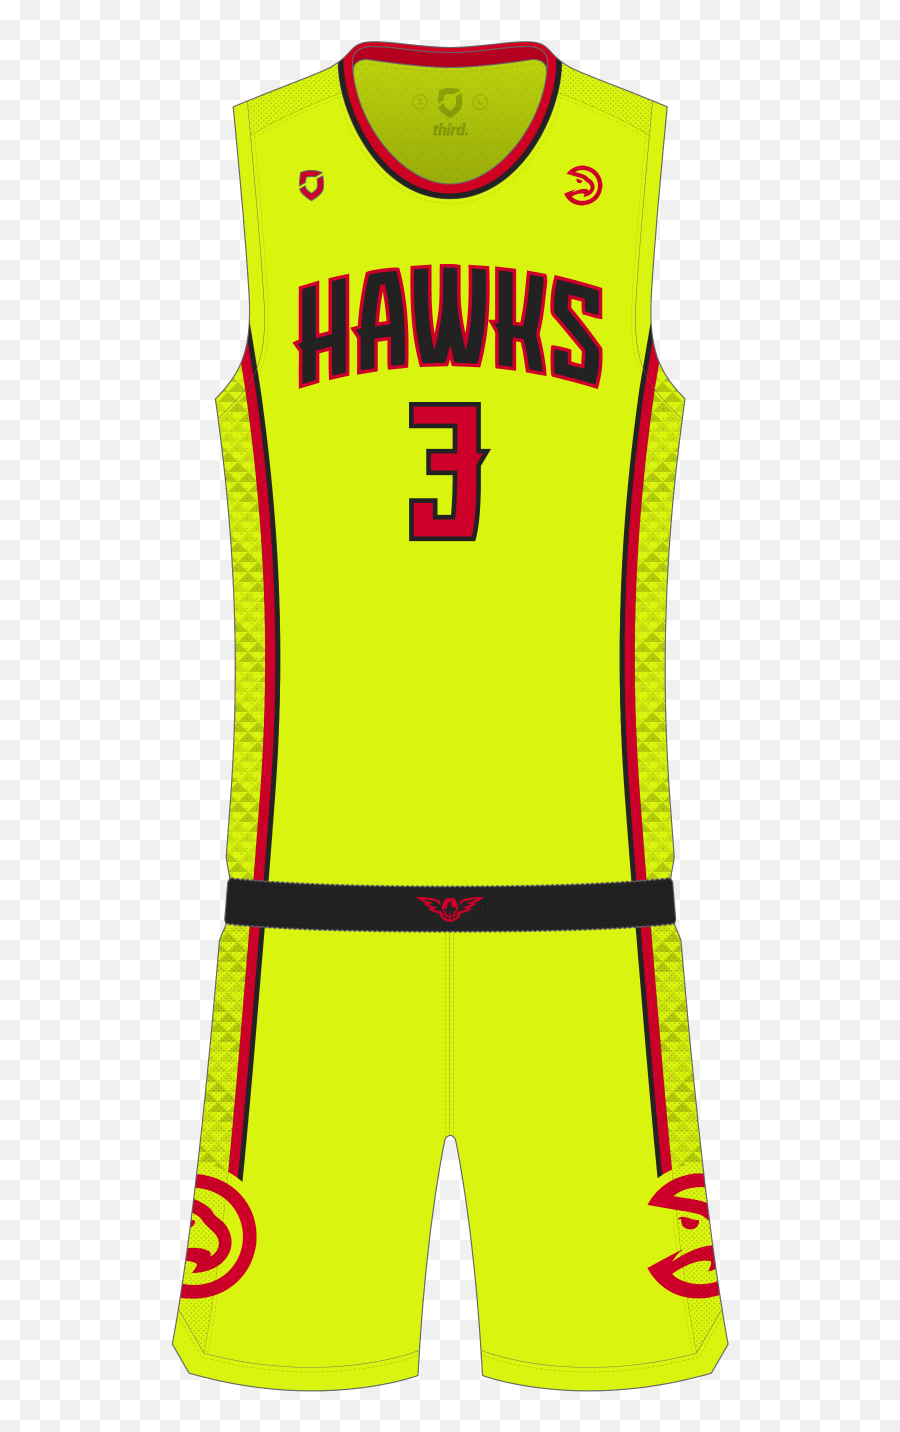 Atlanta Hawks Volt - Atlanta Hawks Yellow Jersey Png,Atlanta Hawks Png